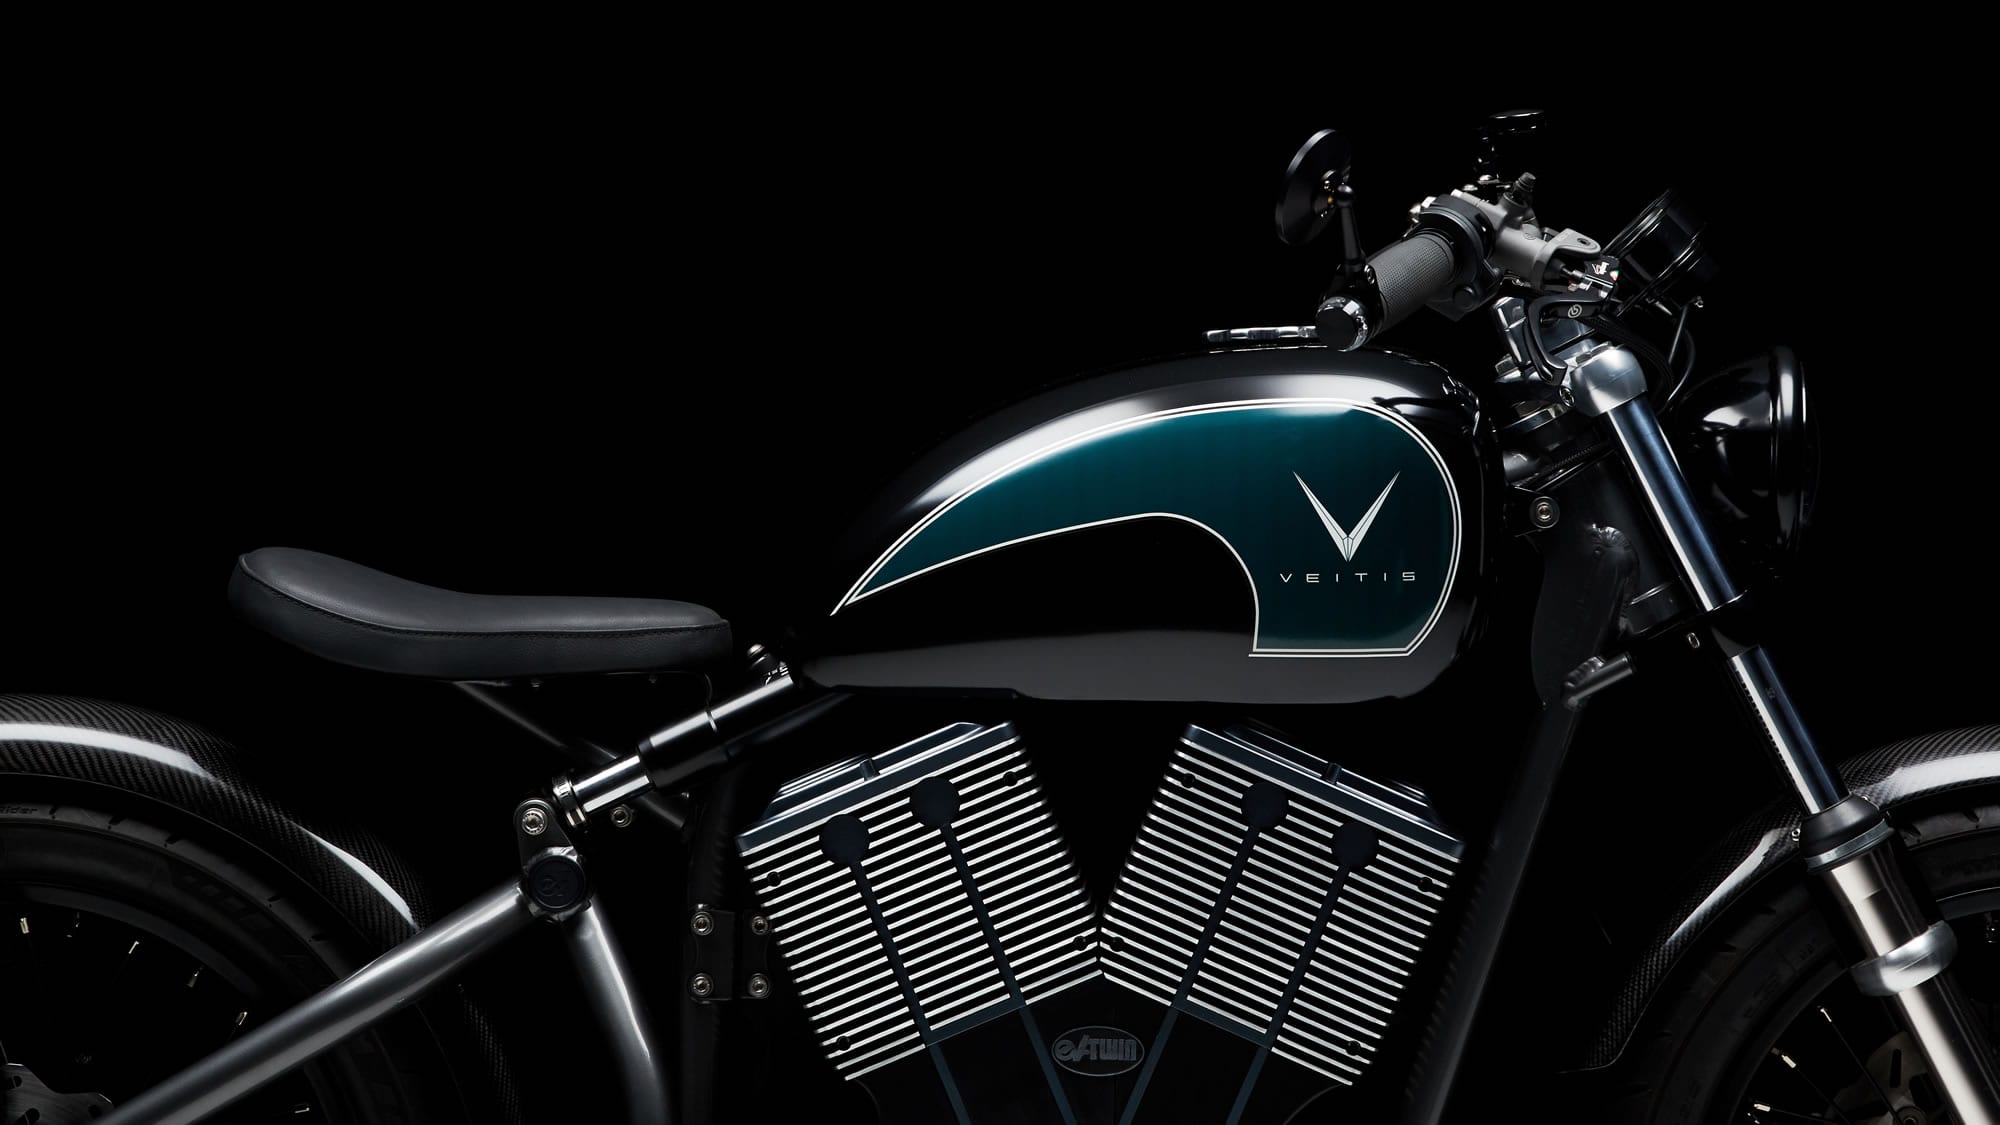 veitis eV-twin moto elettrica inglese stile bobber classico